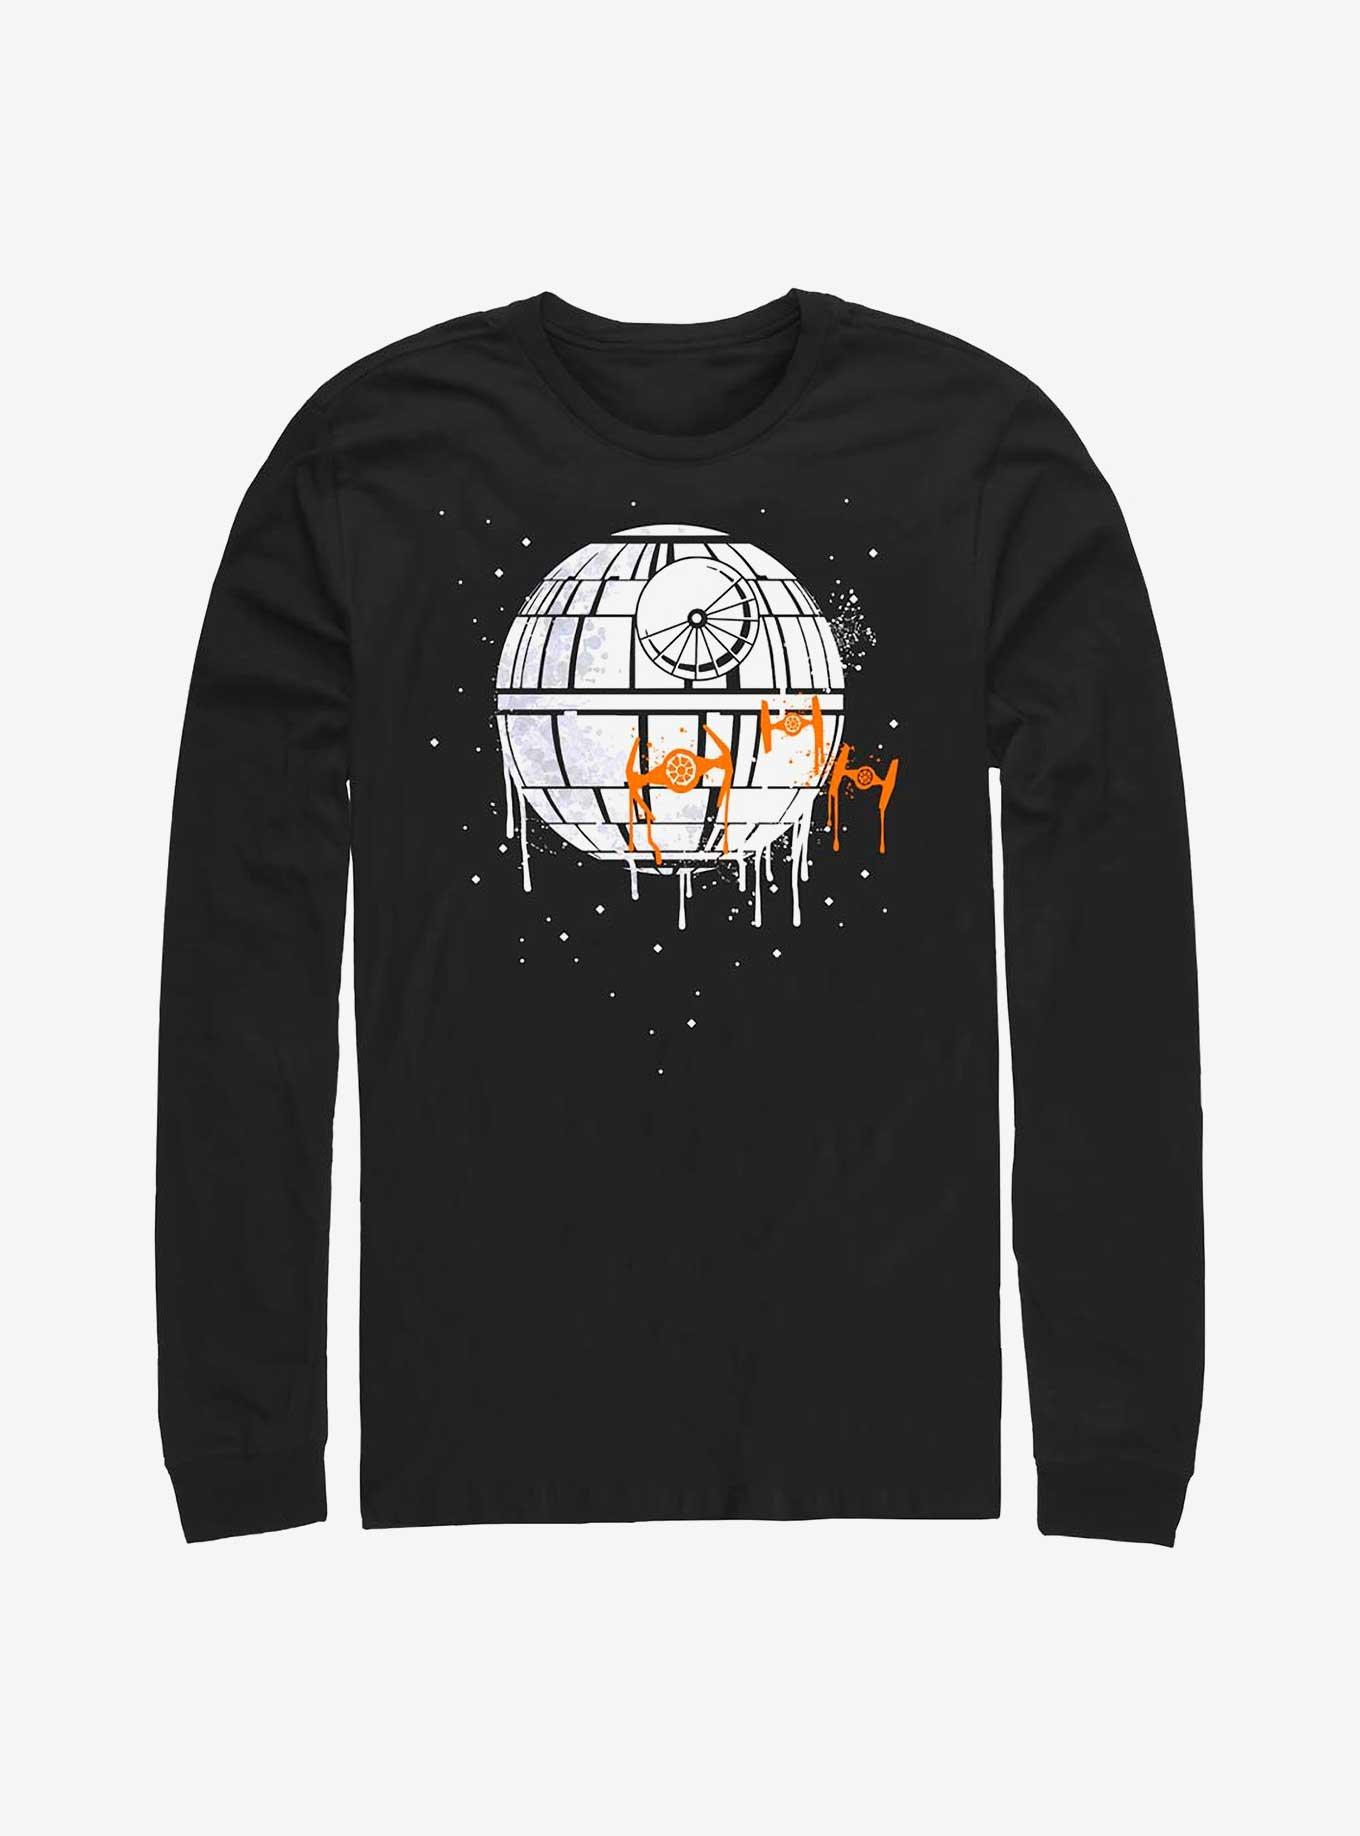 Star Wars Death Drip Long-Sleeve T-Shirt